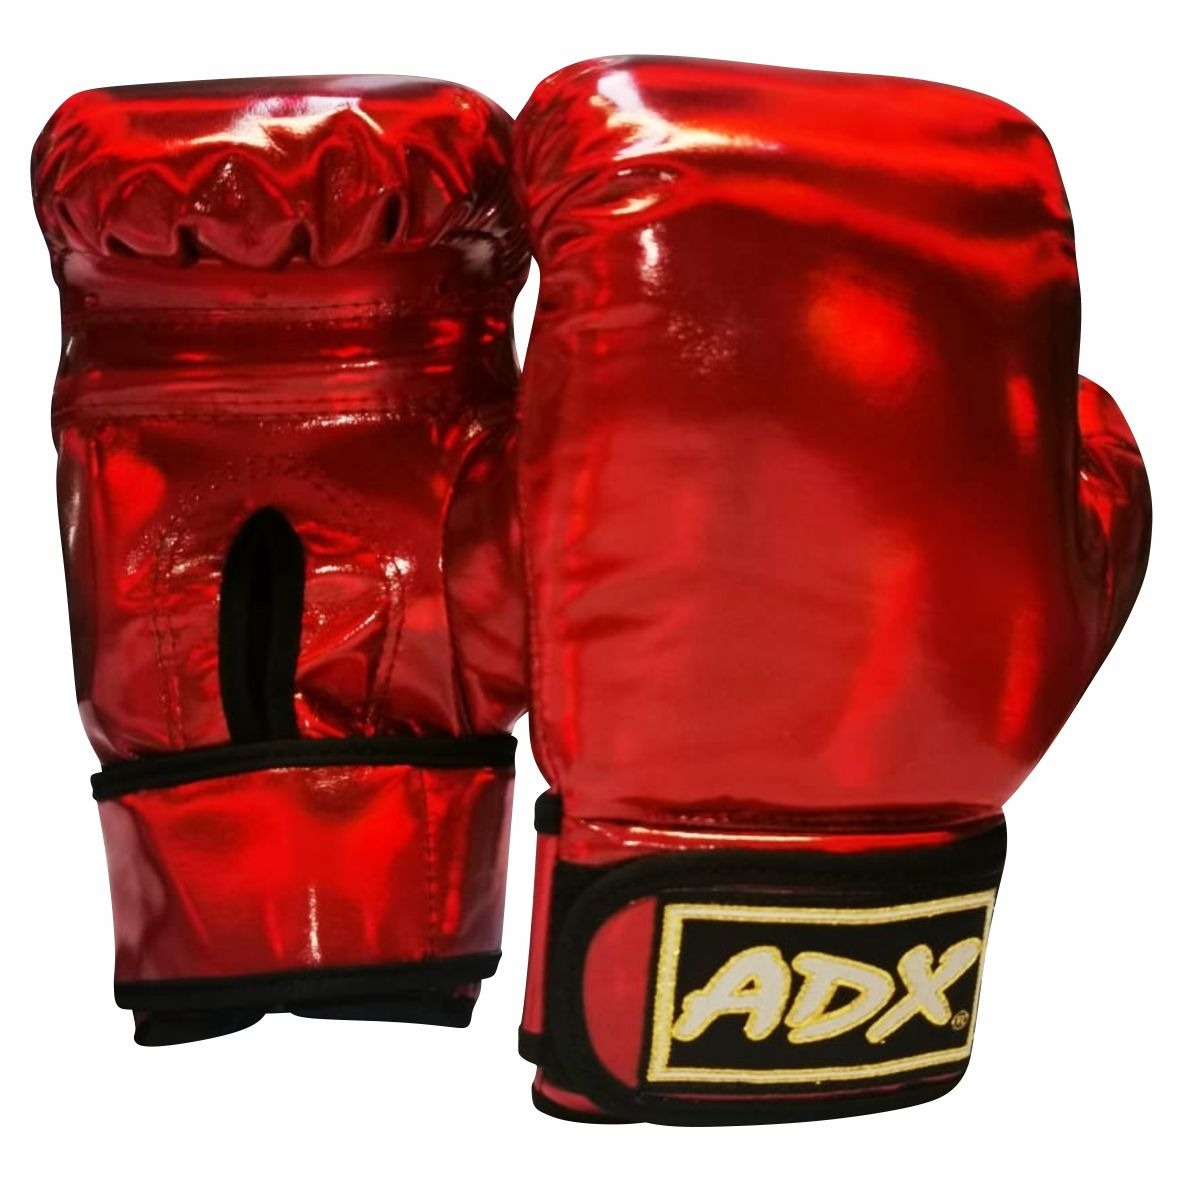 Guante boxeo infantil adx rojo agresivo metalico pu uso rudo – ADX